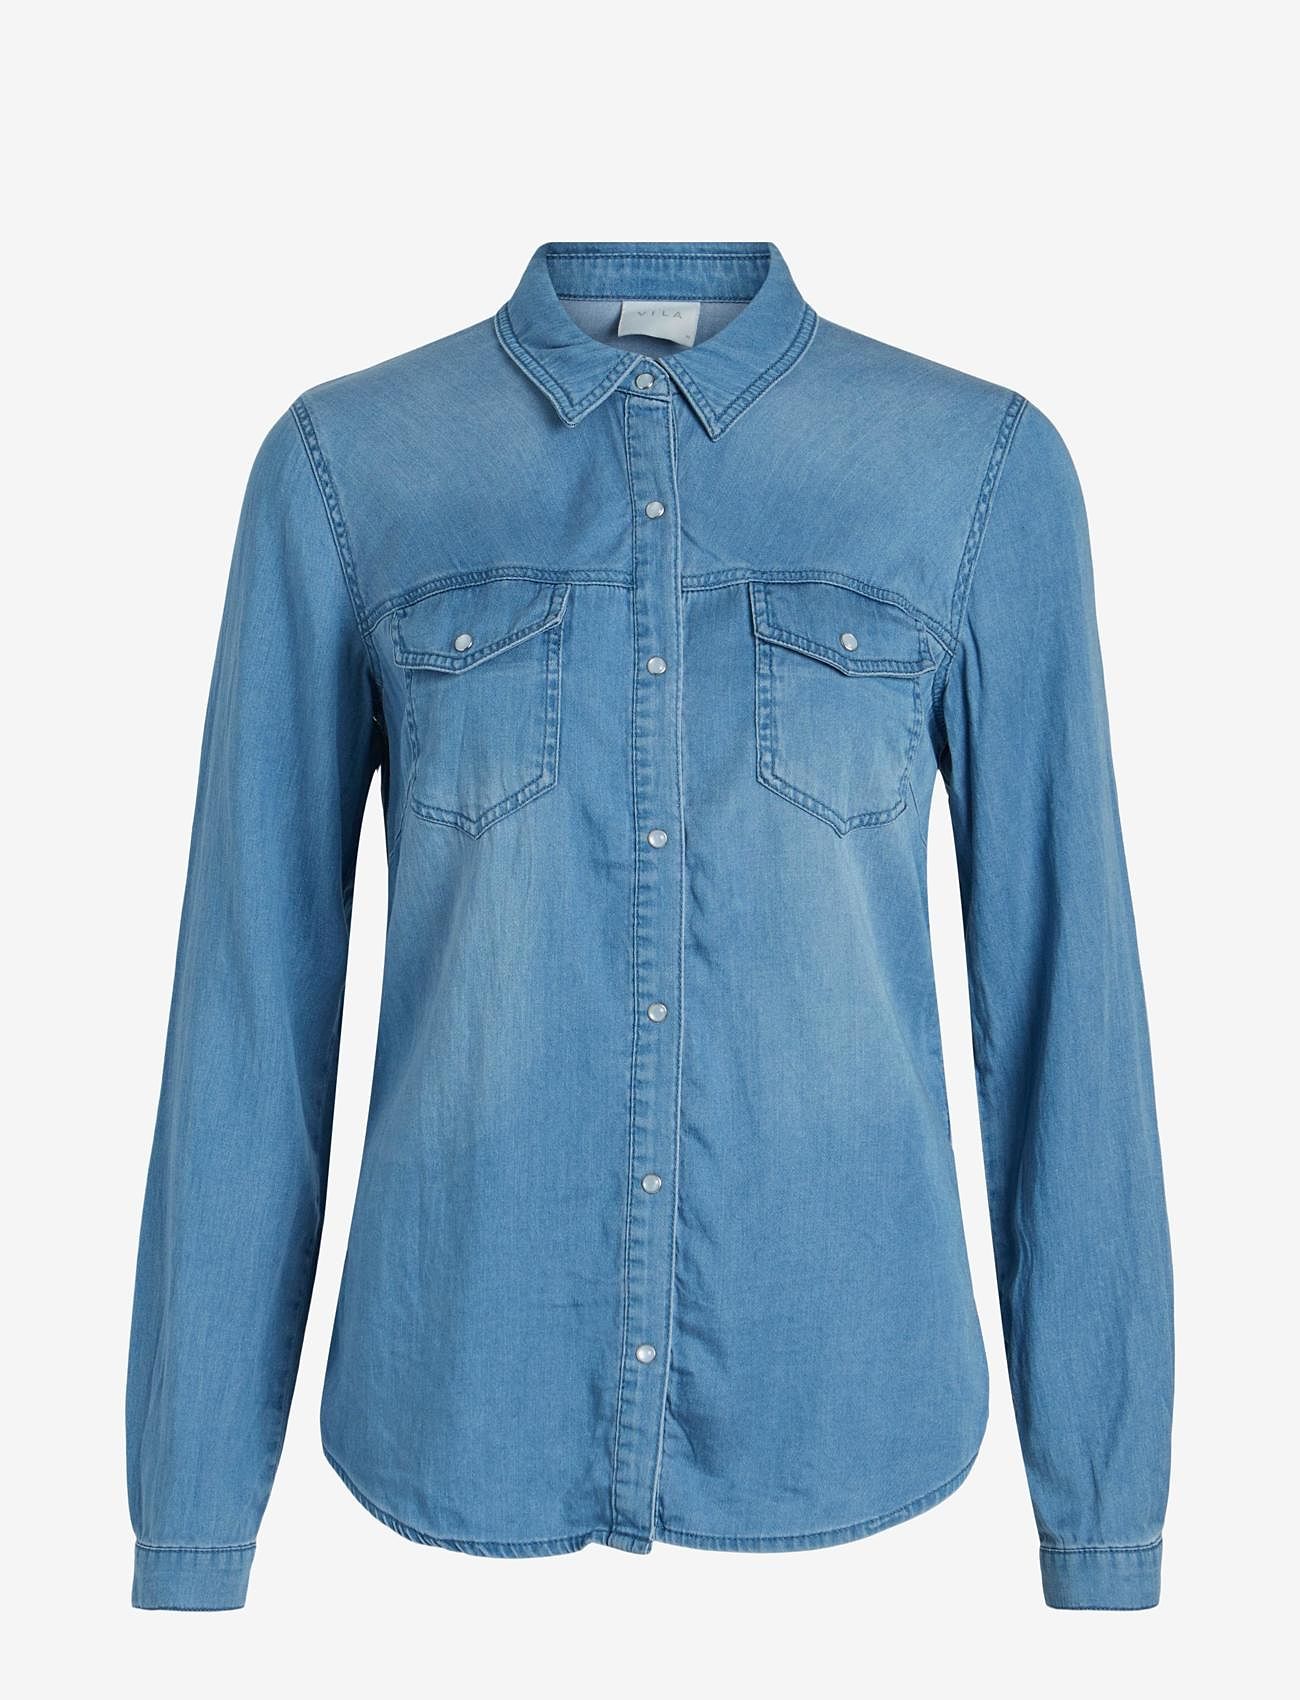 Vila - VIBISTA DENIM SHIRT-NOOS - jeansskjortor - medium blue denim - 1